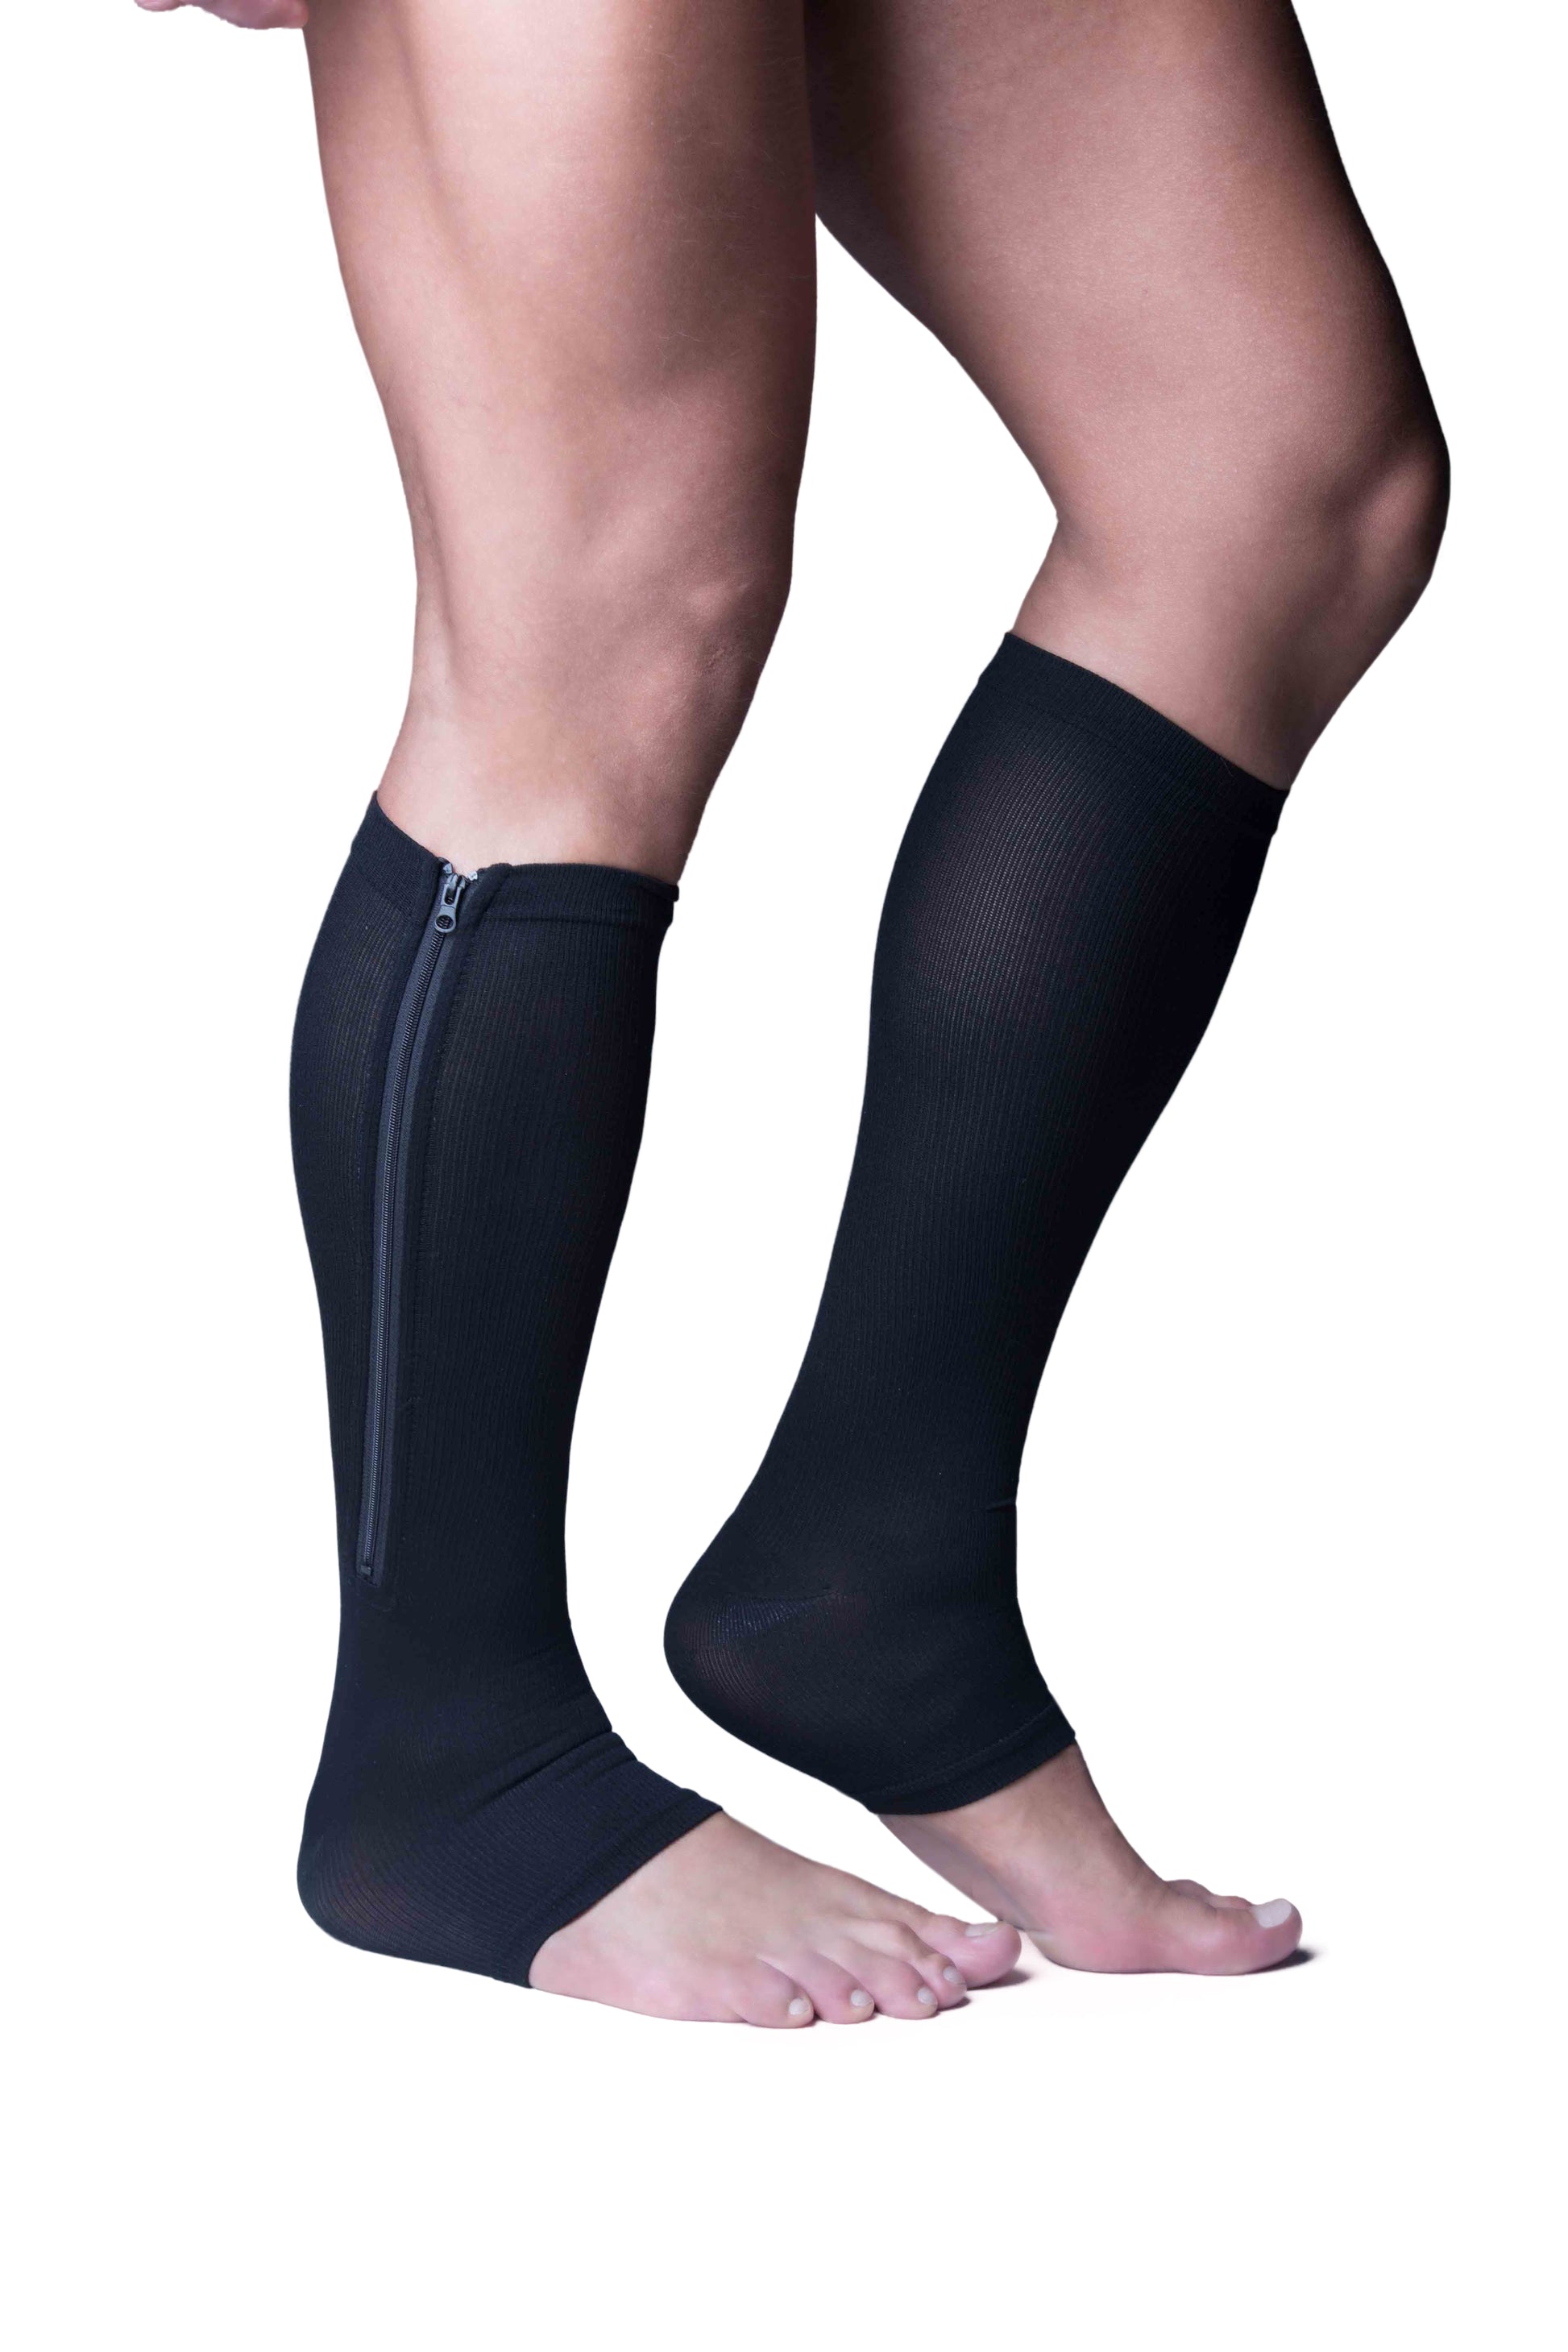 3 Pairs Vital Socks - Compression and Circulation Compresión